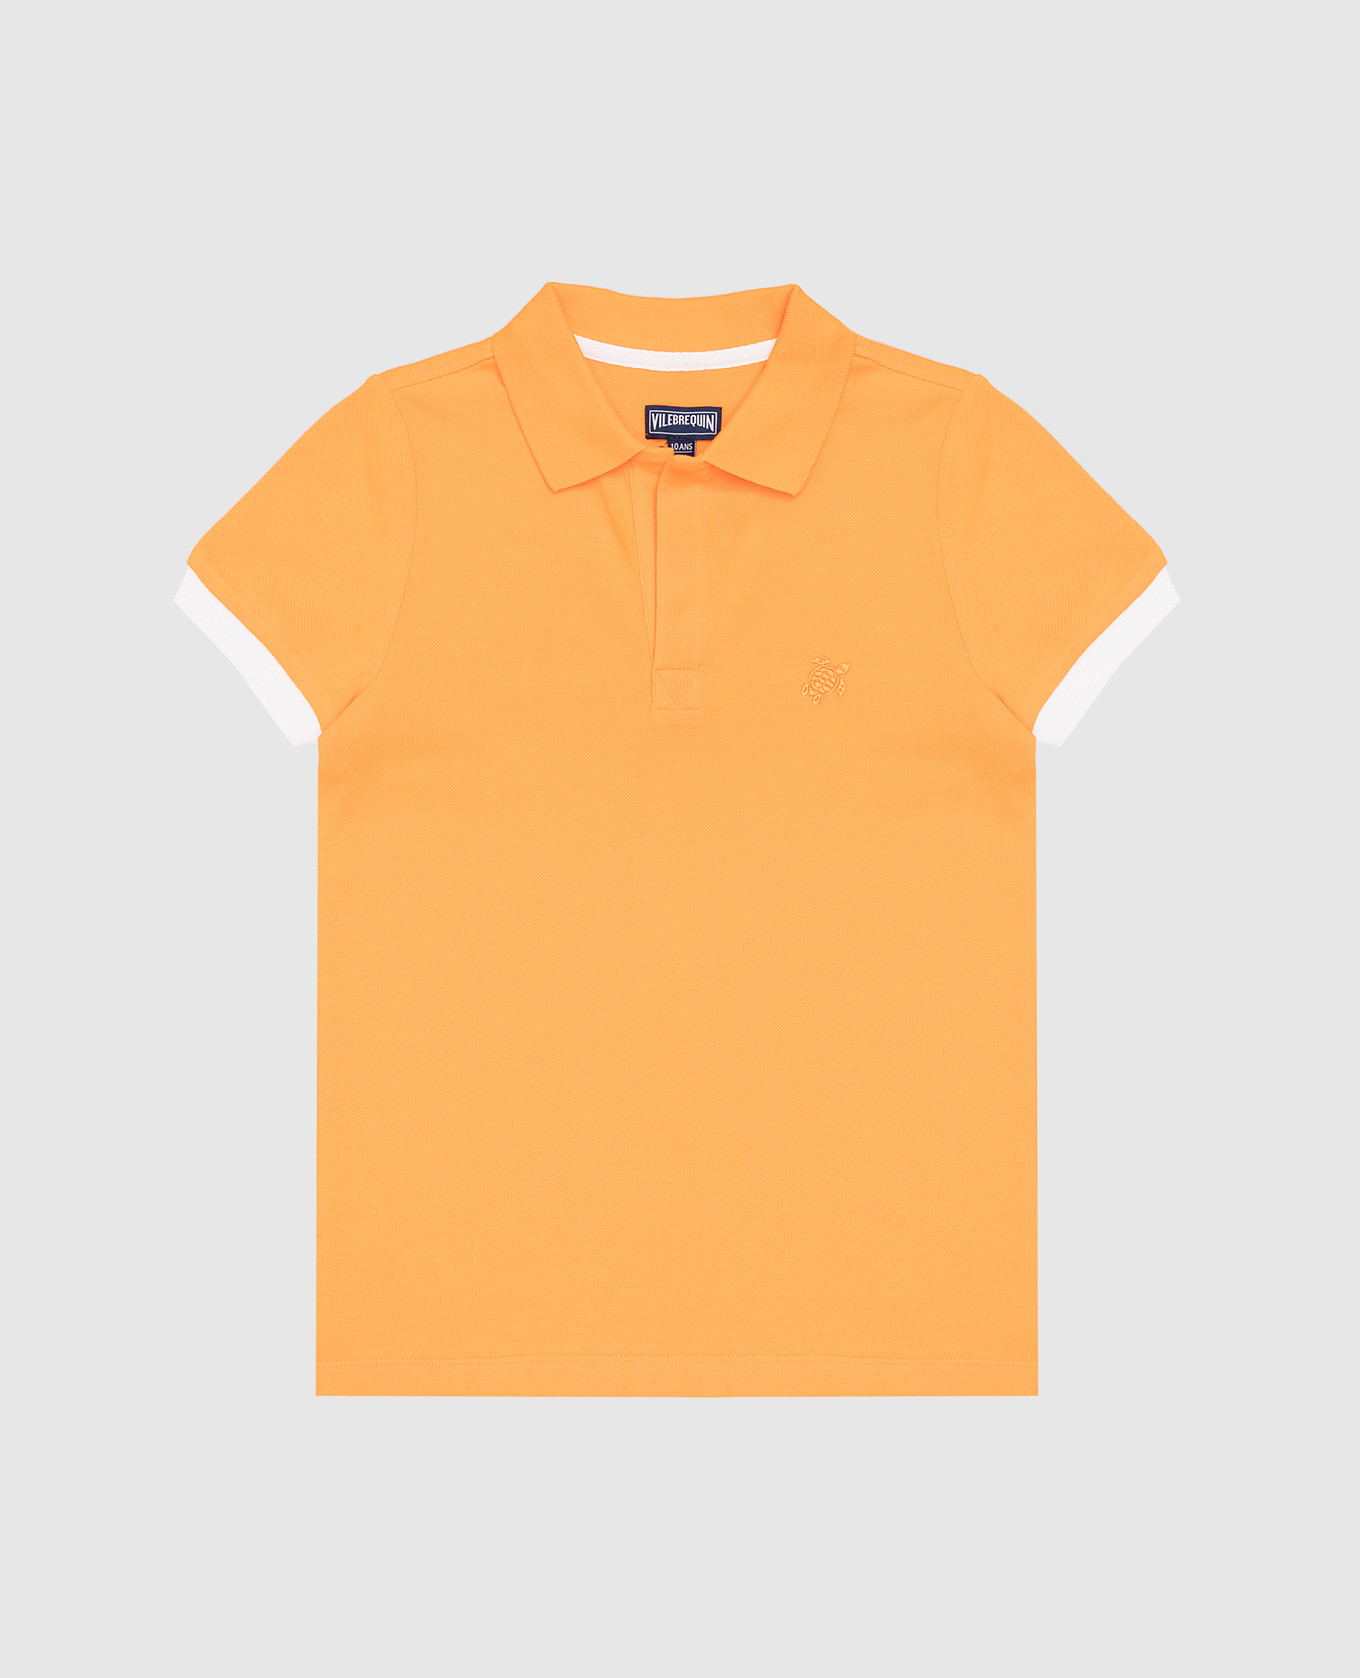 Pantin orange polo shirt for children